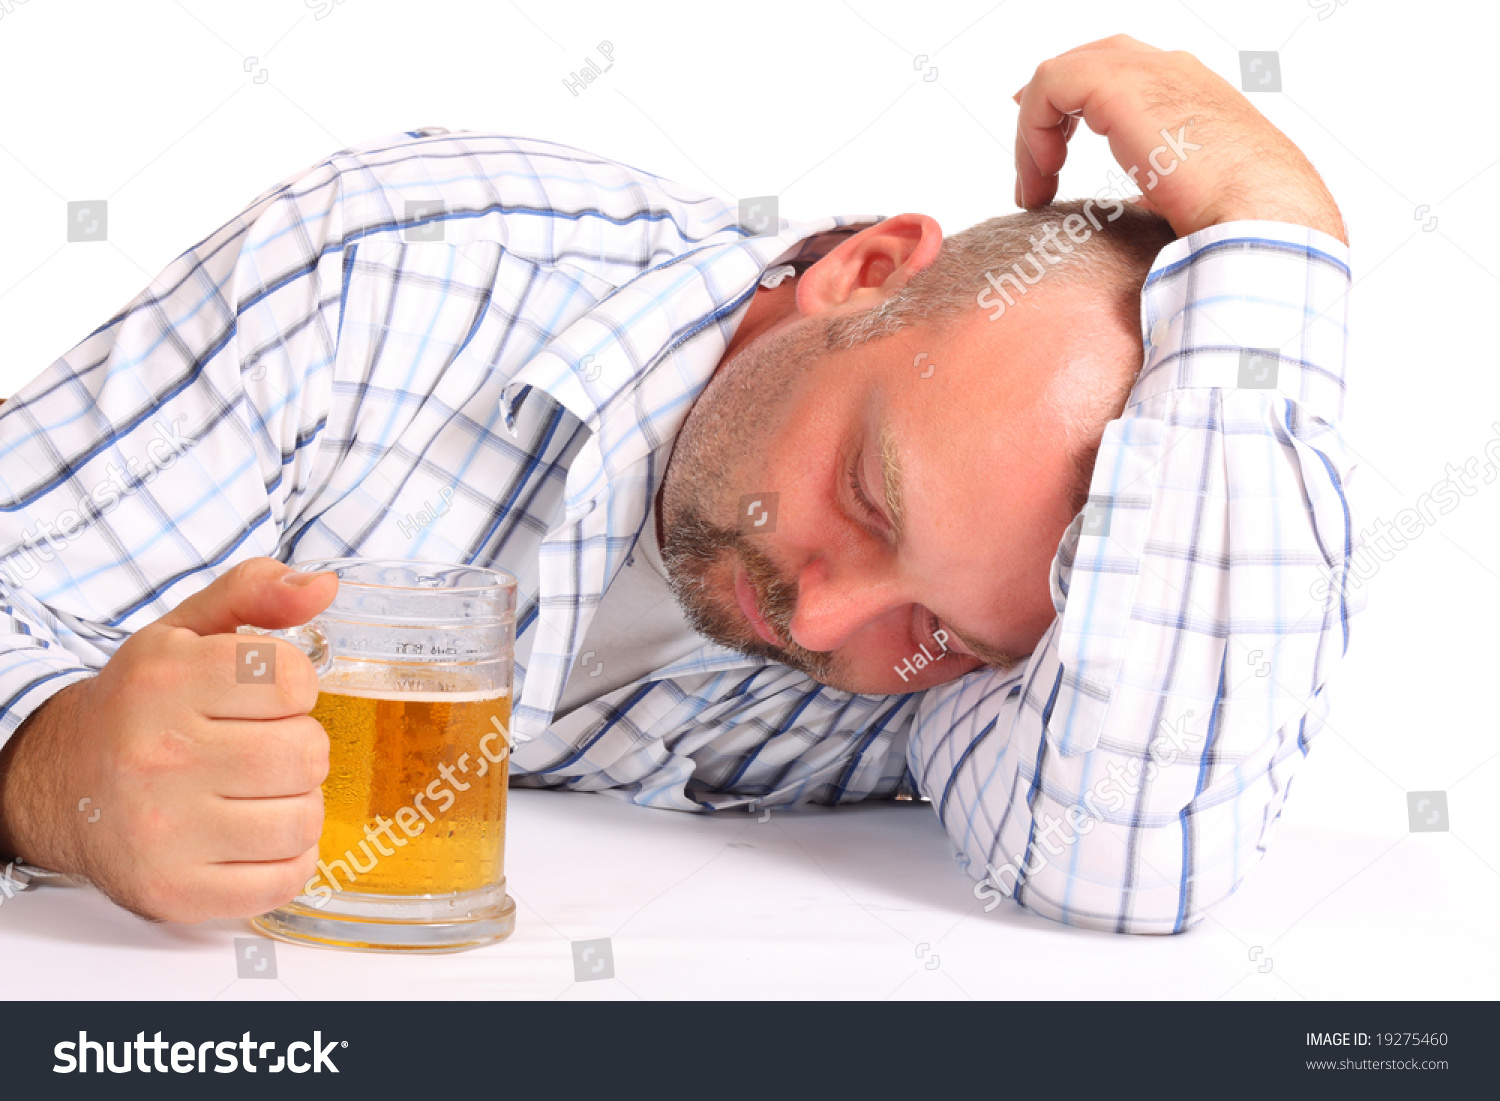 Drunk Man Stock Photo 19275460 : Shutterstock